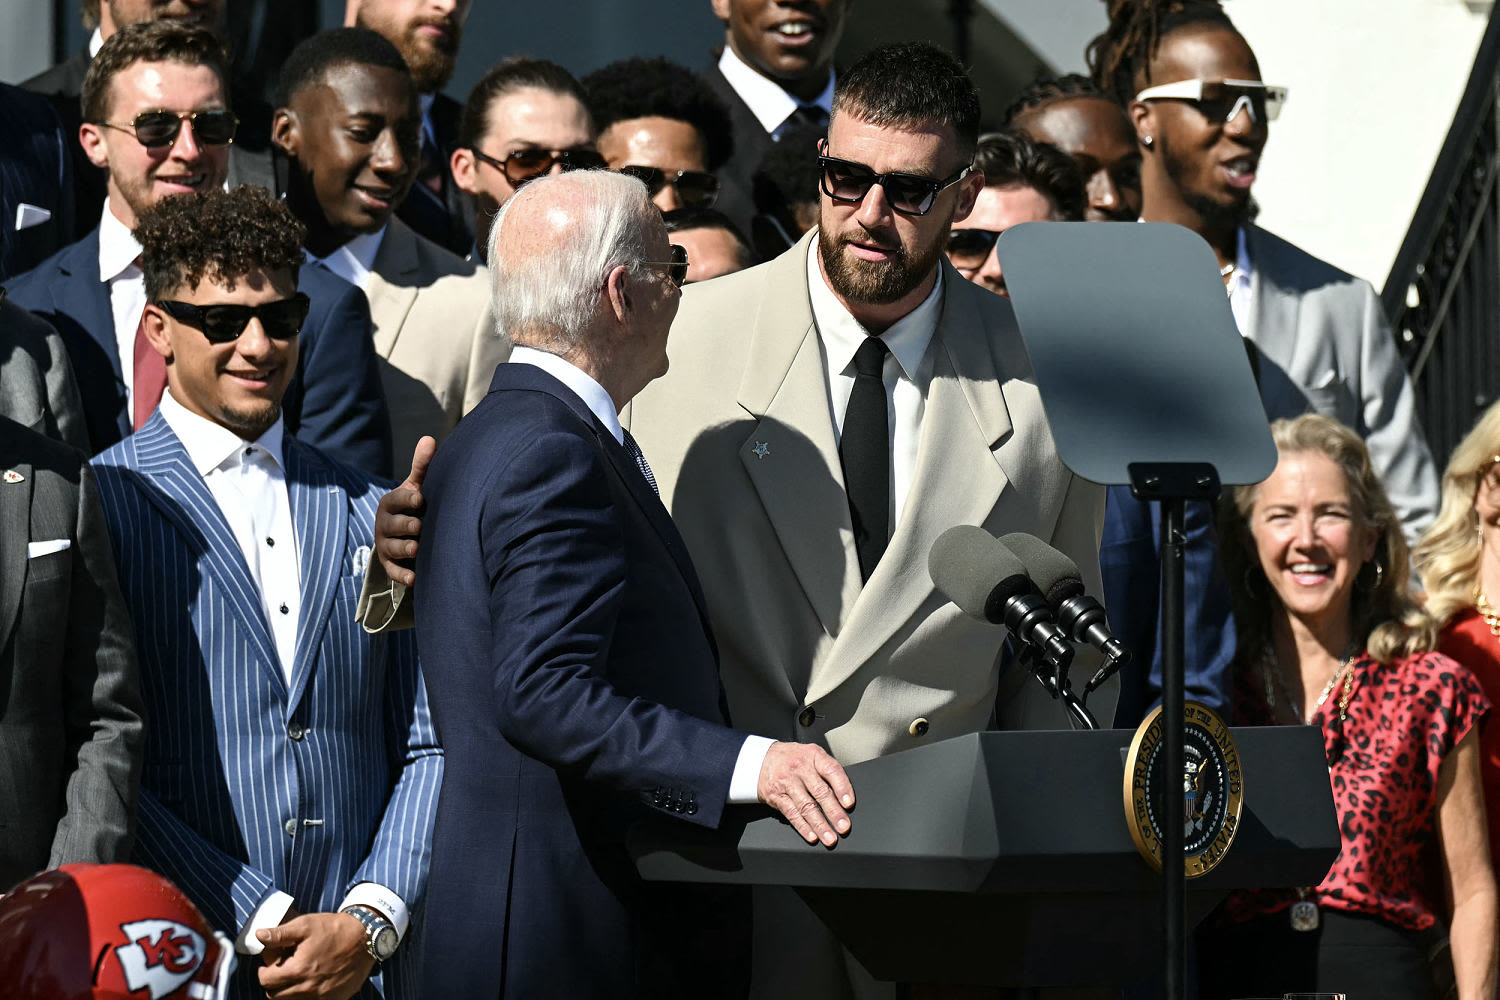 President Biden lets Travis Kelce address crowd at event celebrating Chiefs’ Super Bowl win